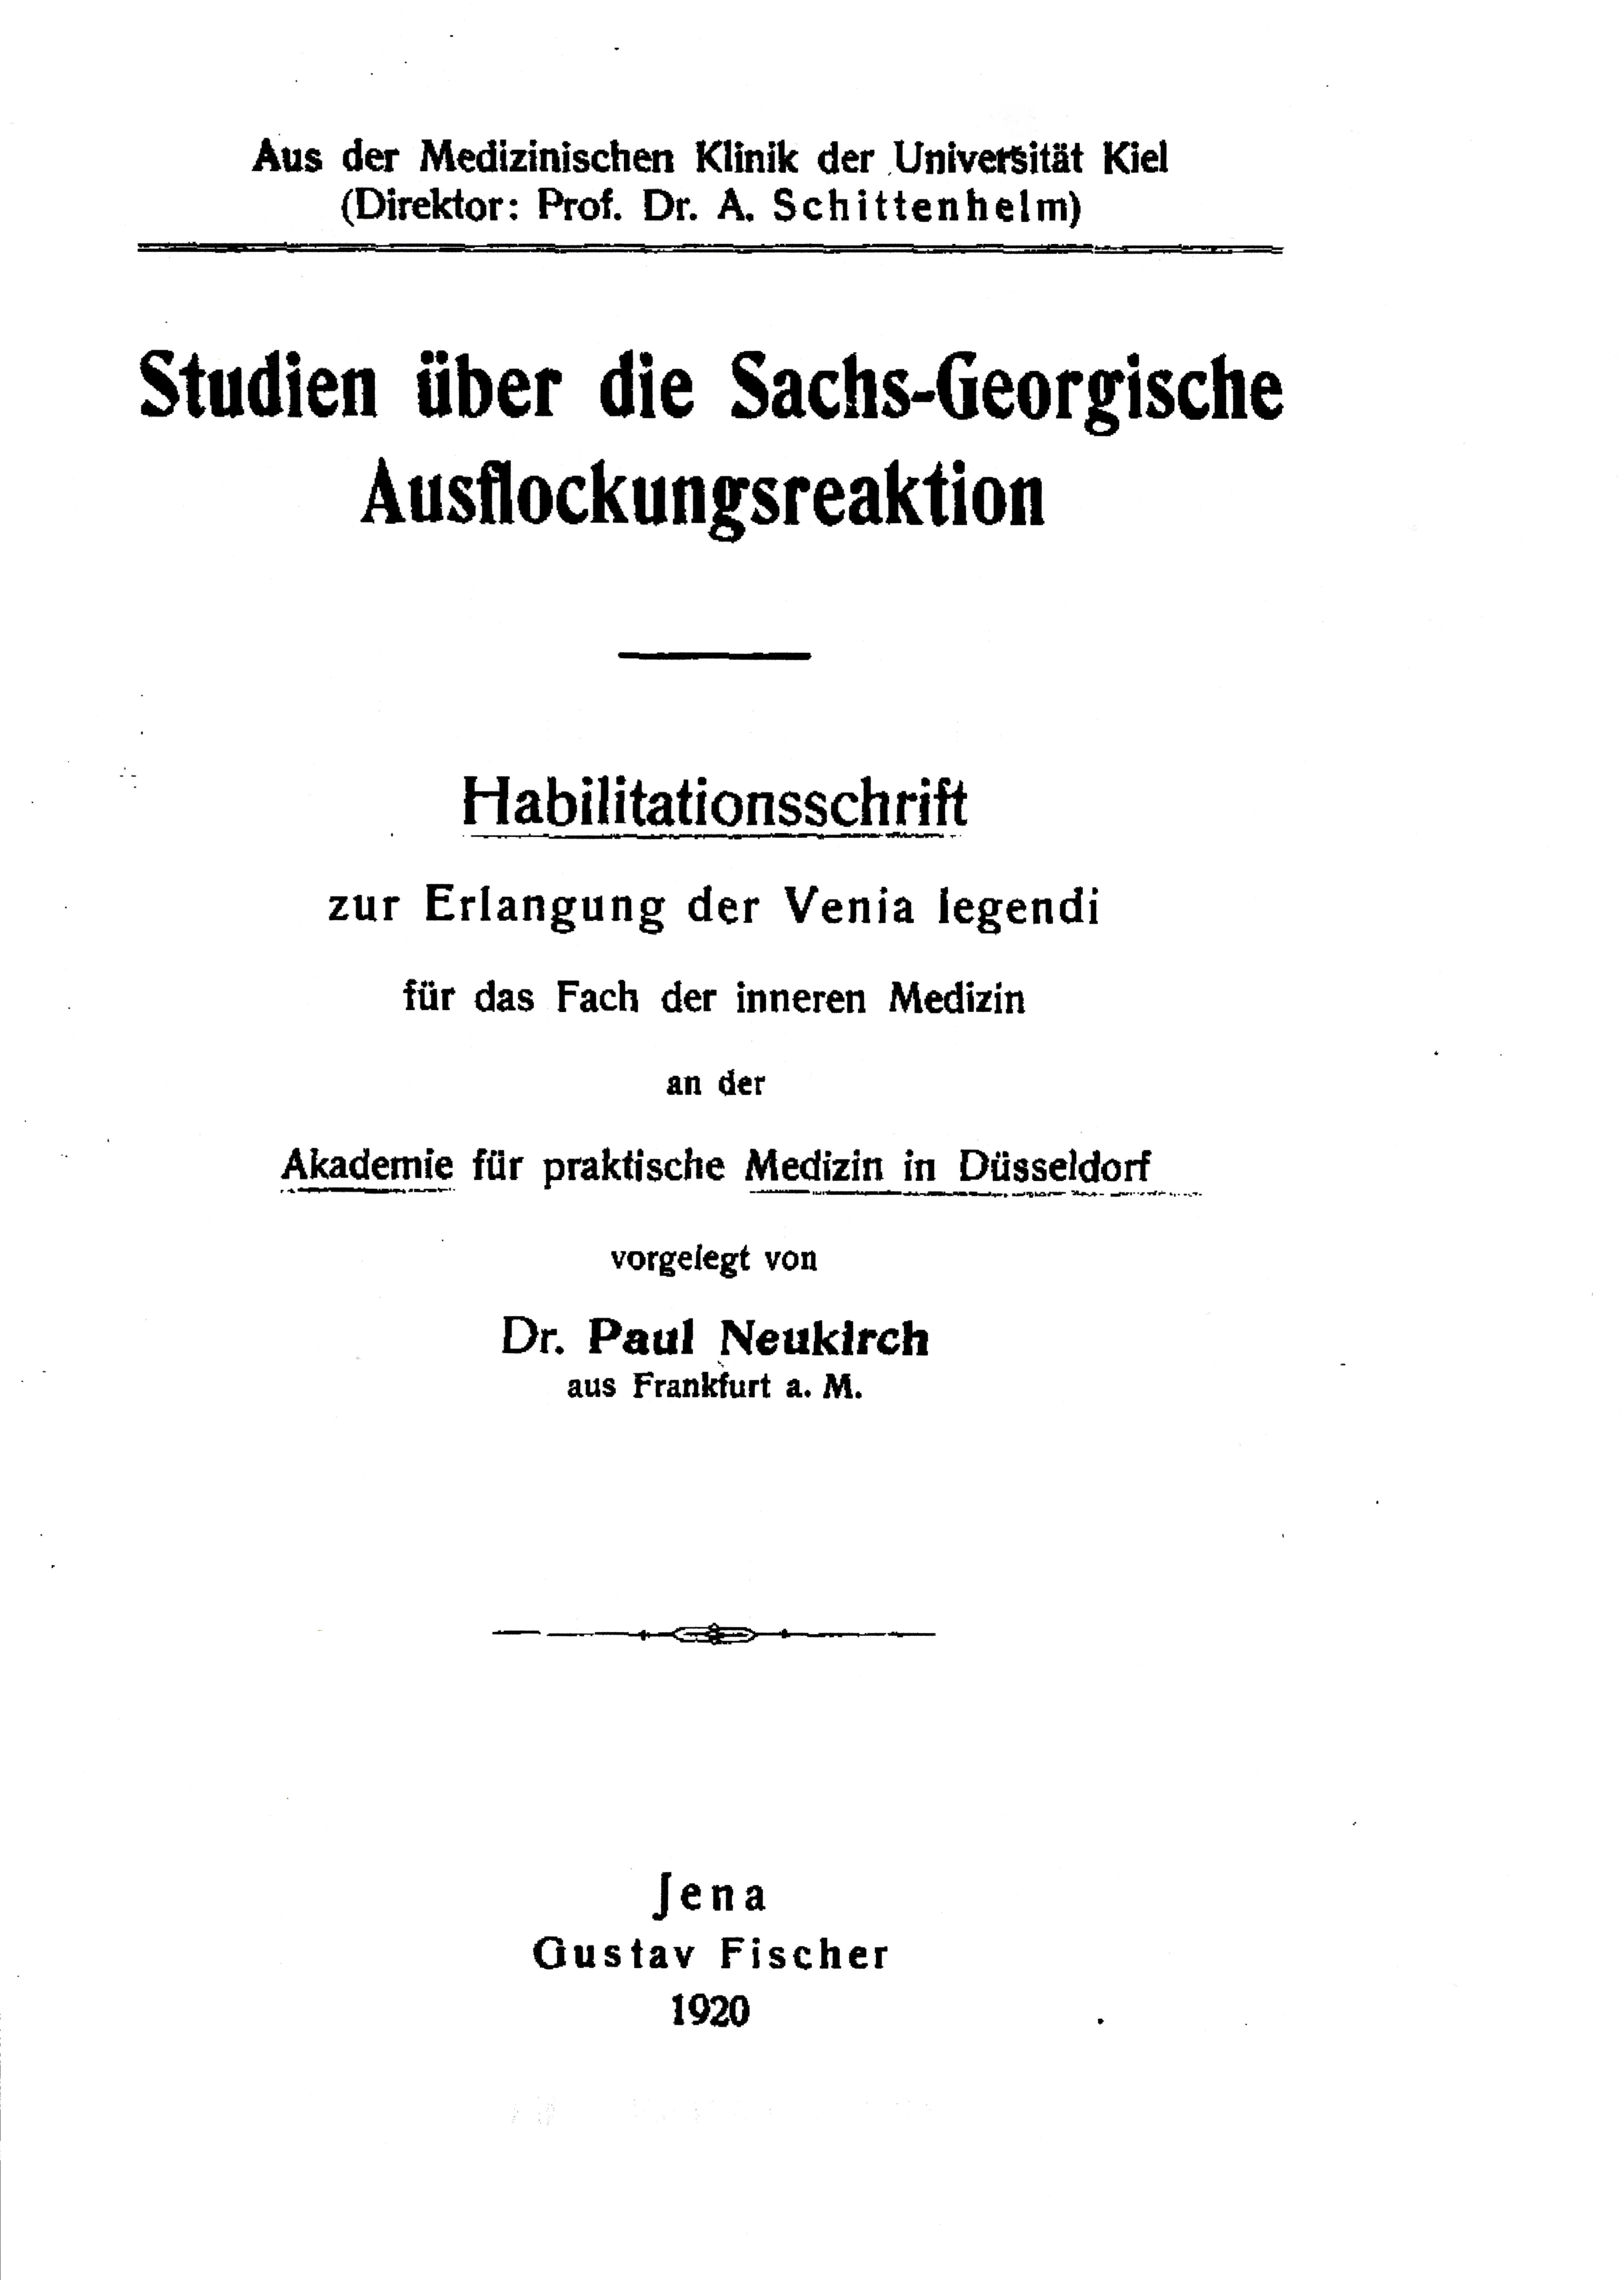 Habilitation thesis, Düsseldorf 1920